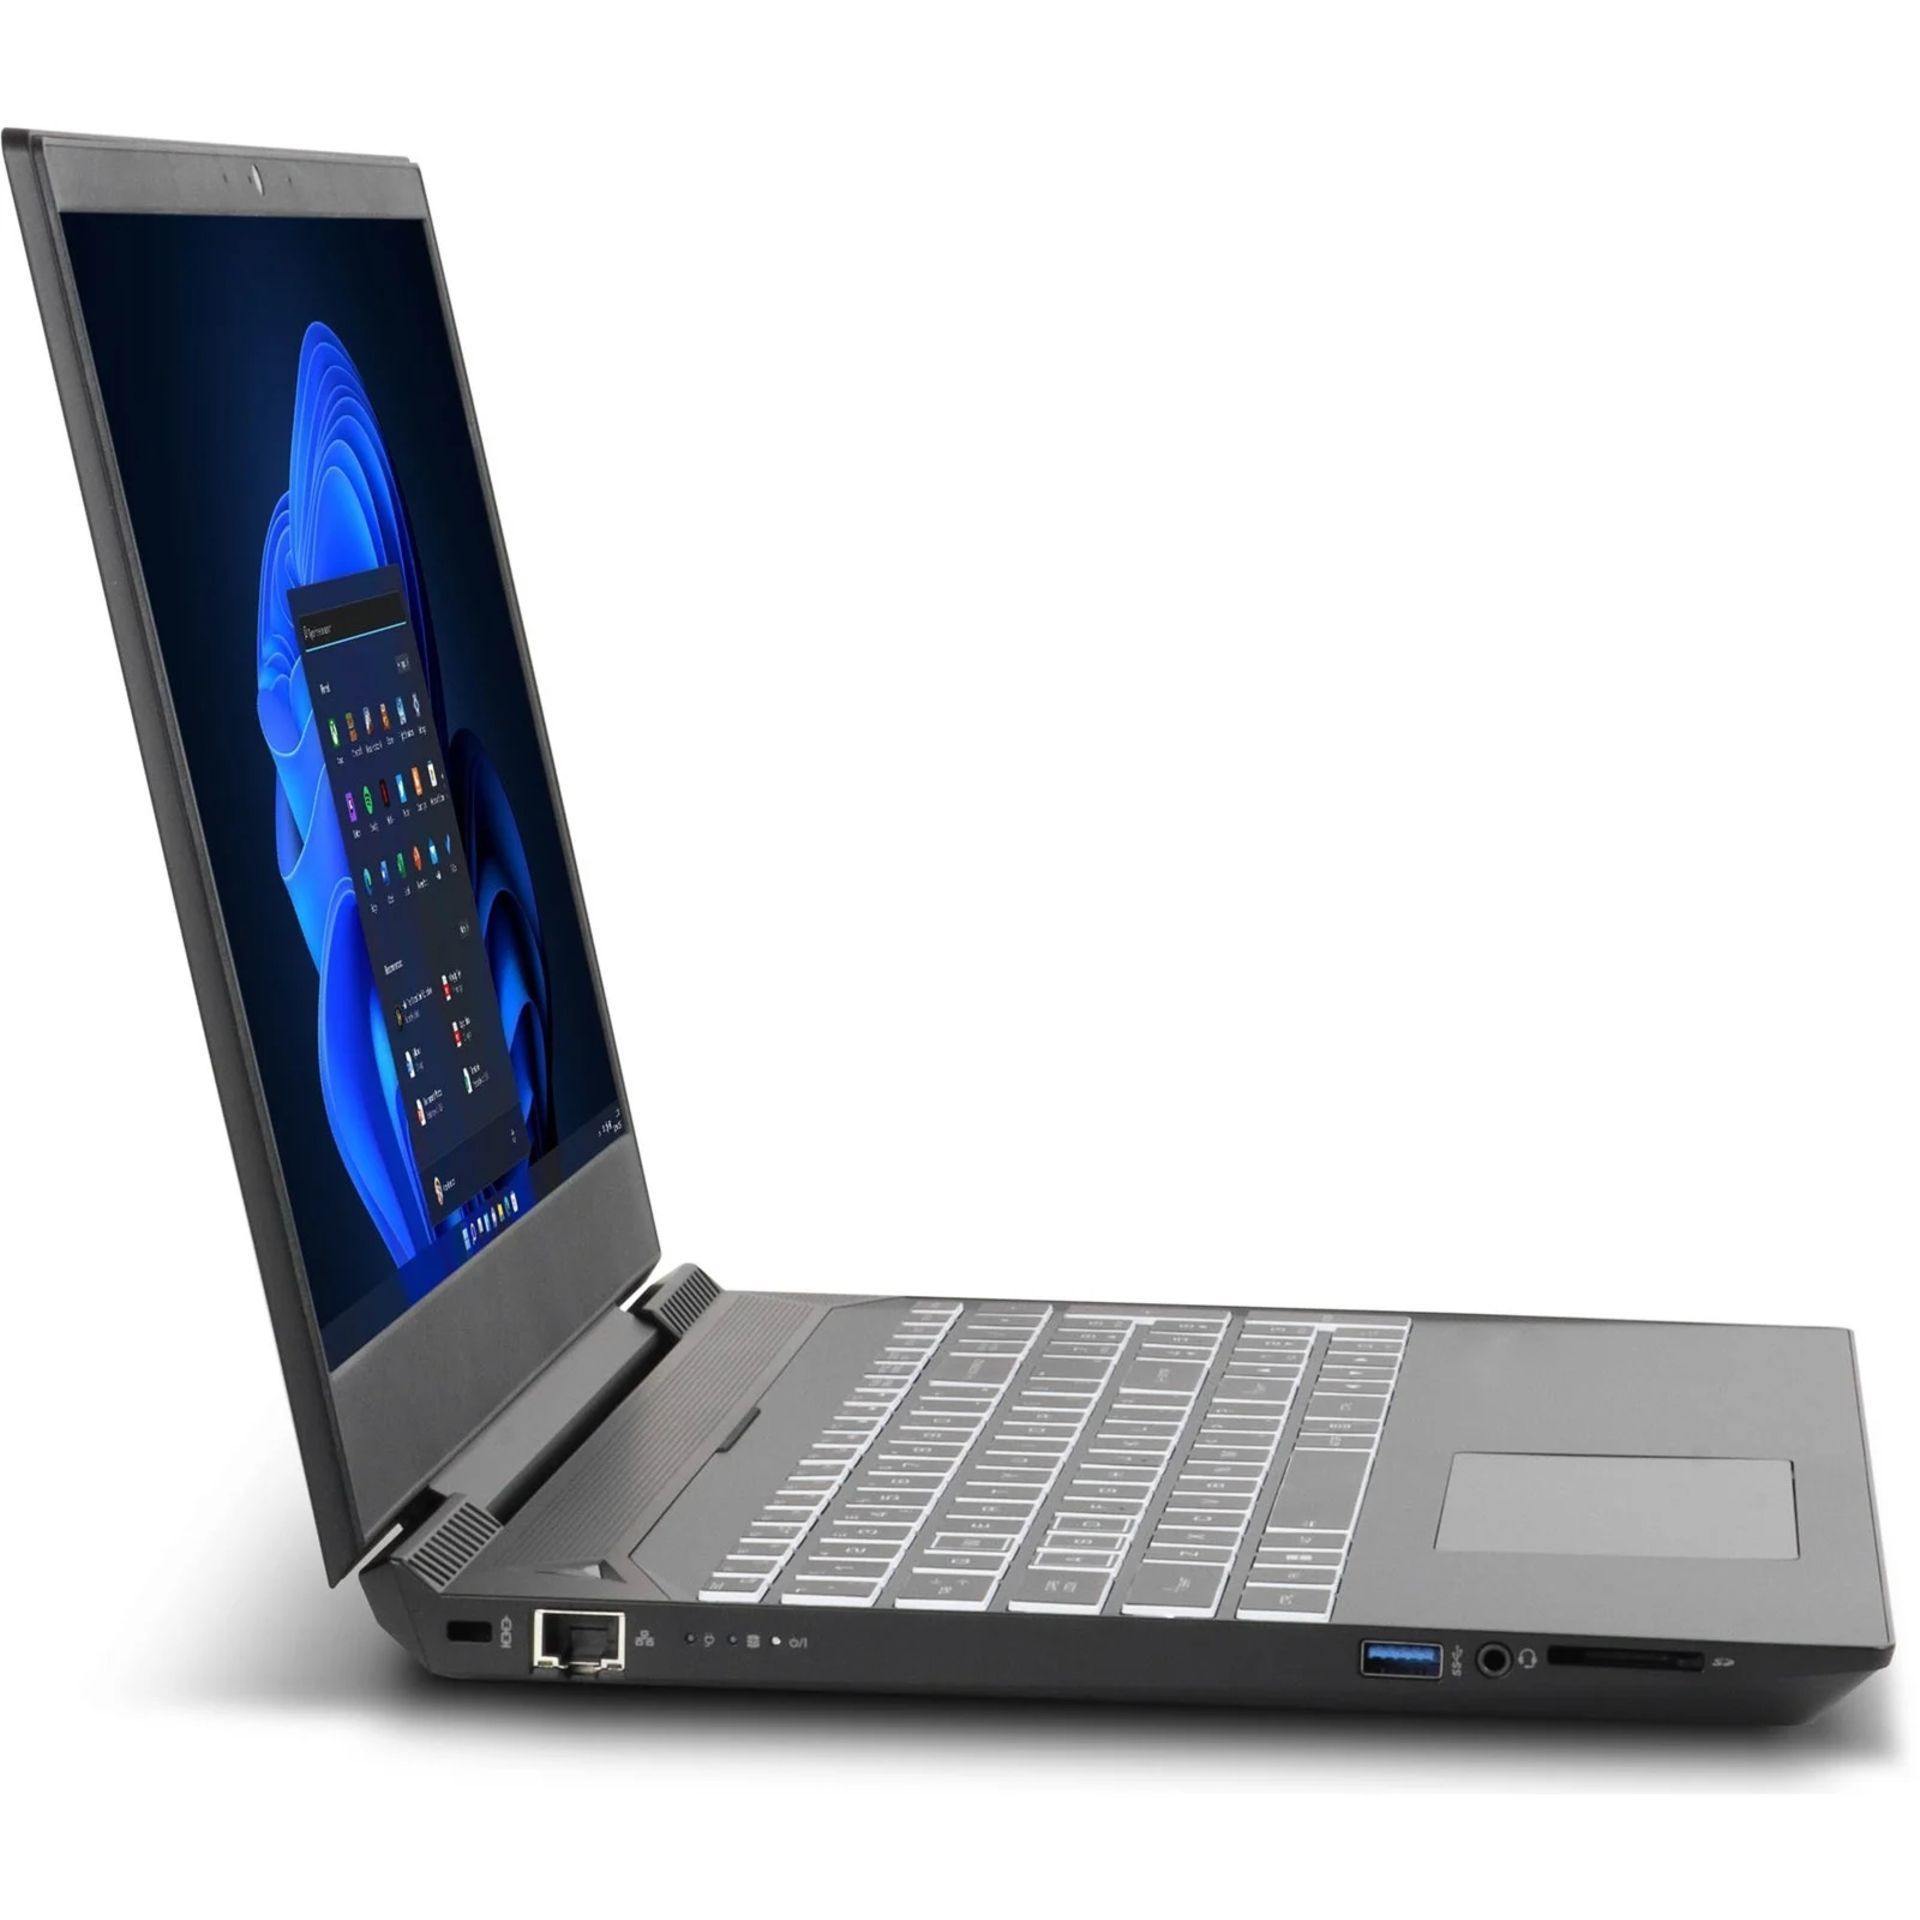 NEW & BOXED CHILLBLAST APOLLO 15.6 Inch i7 Gaming Laptop. RRP £895. Intel Core i7-12700H 14-core - Image 3 of 9